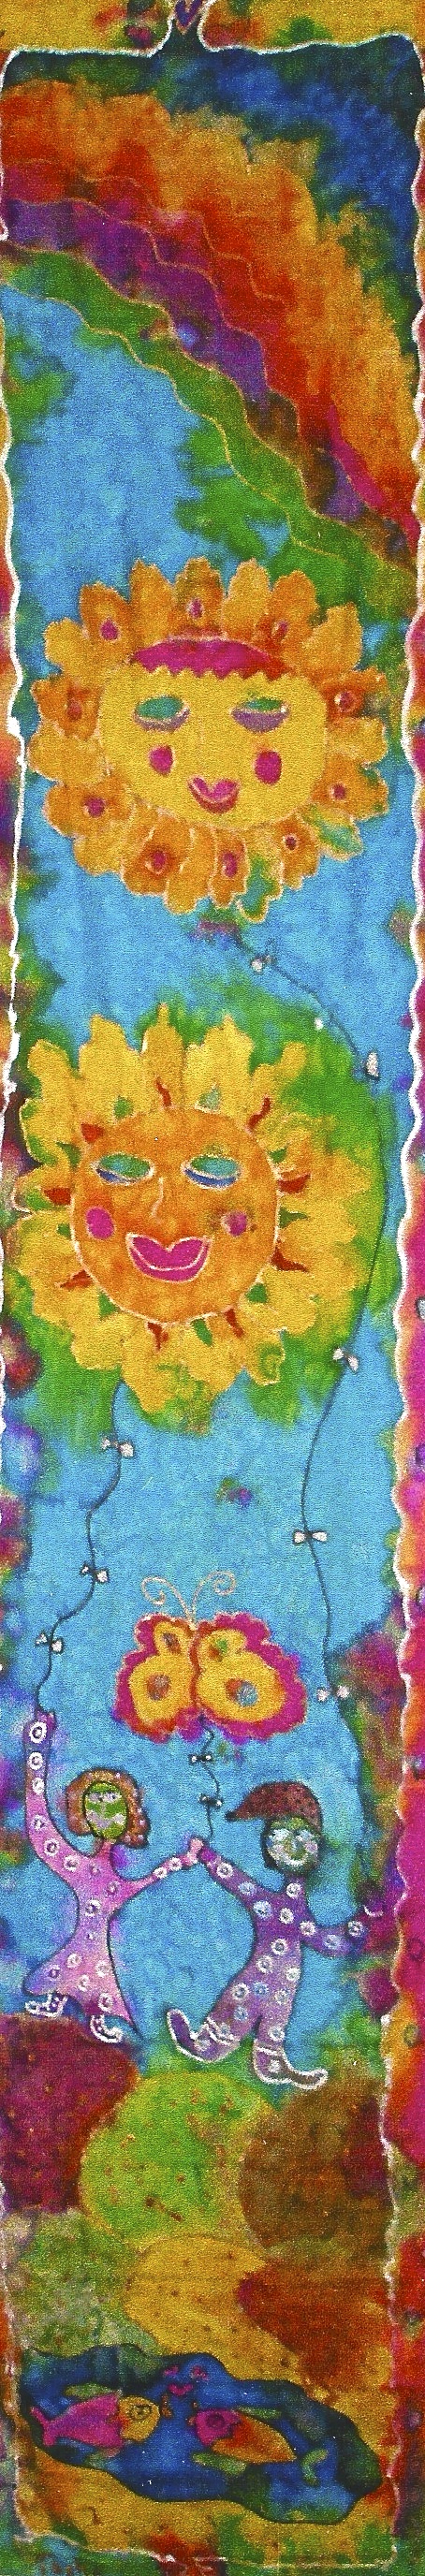 Whimsical art silk painting banner / scarf by Tasha Paley